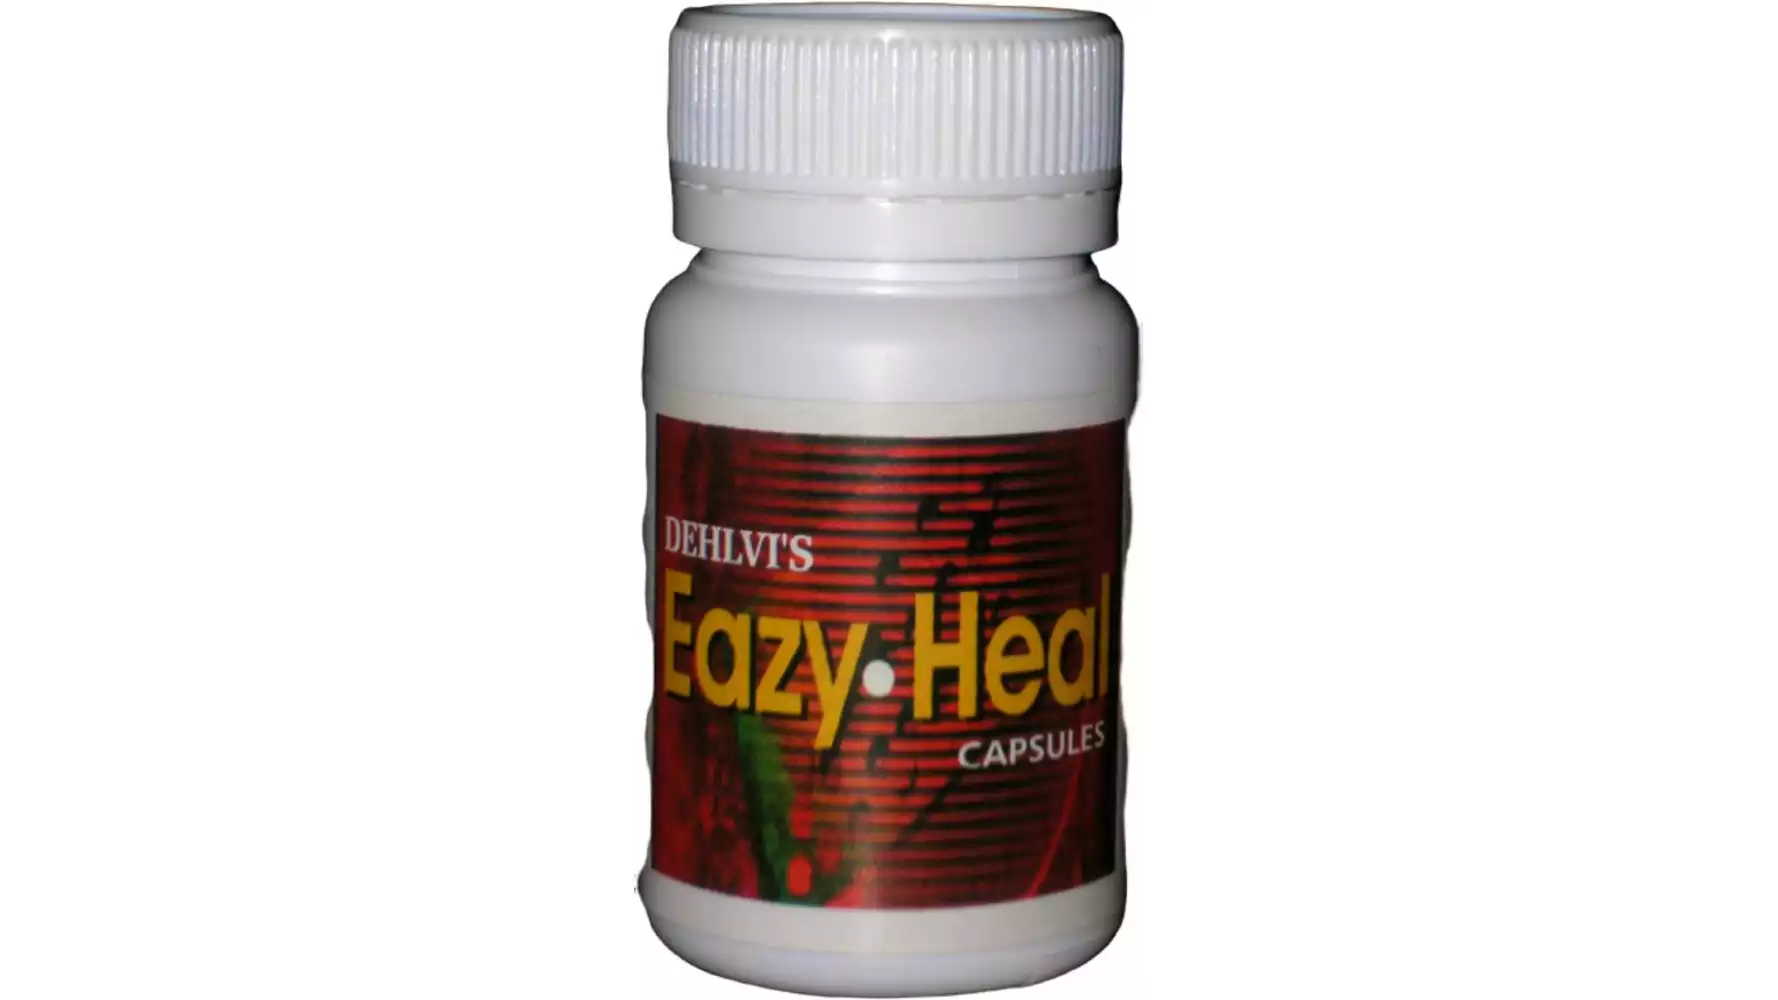 Dehlvi Eazy Heal Capsules (60caps)